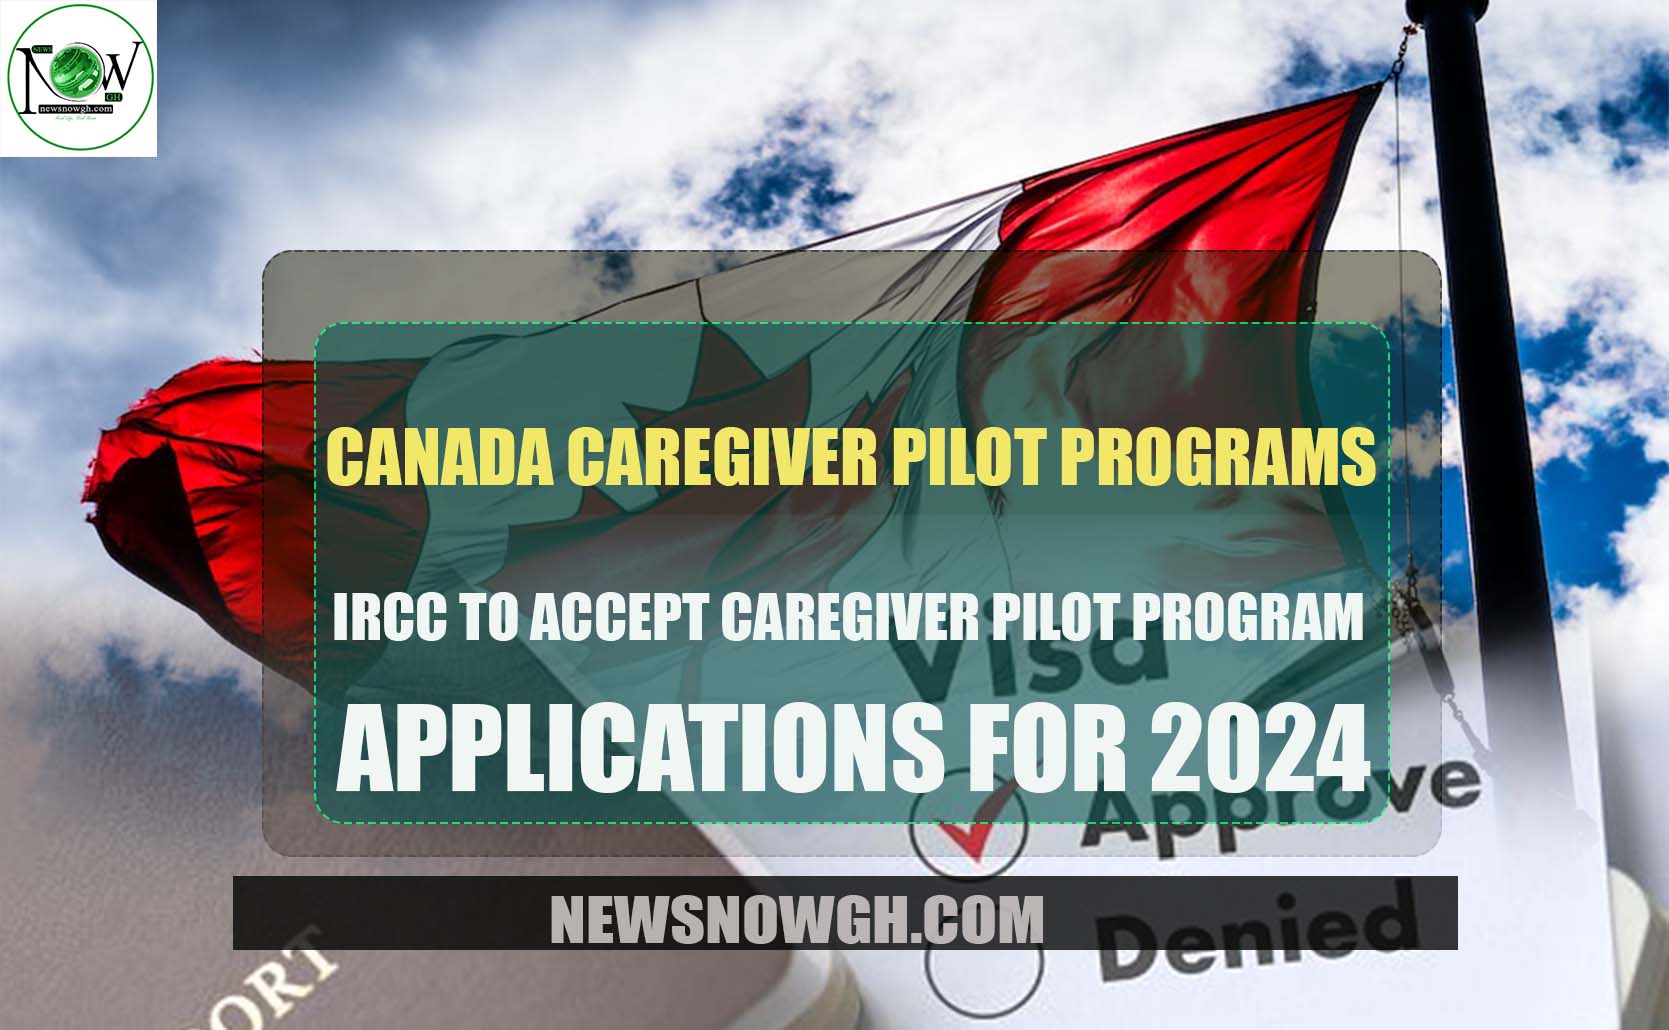 Canada Caregiver Pilot Programs IRCC to Accept Caregiver Pilot Program